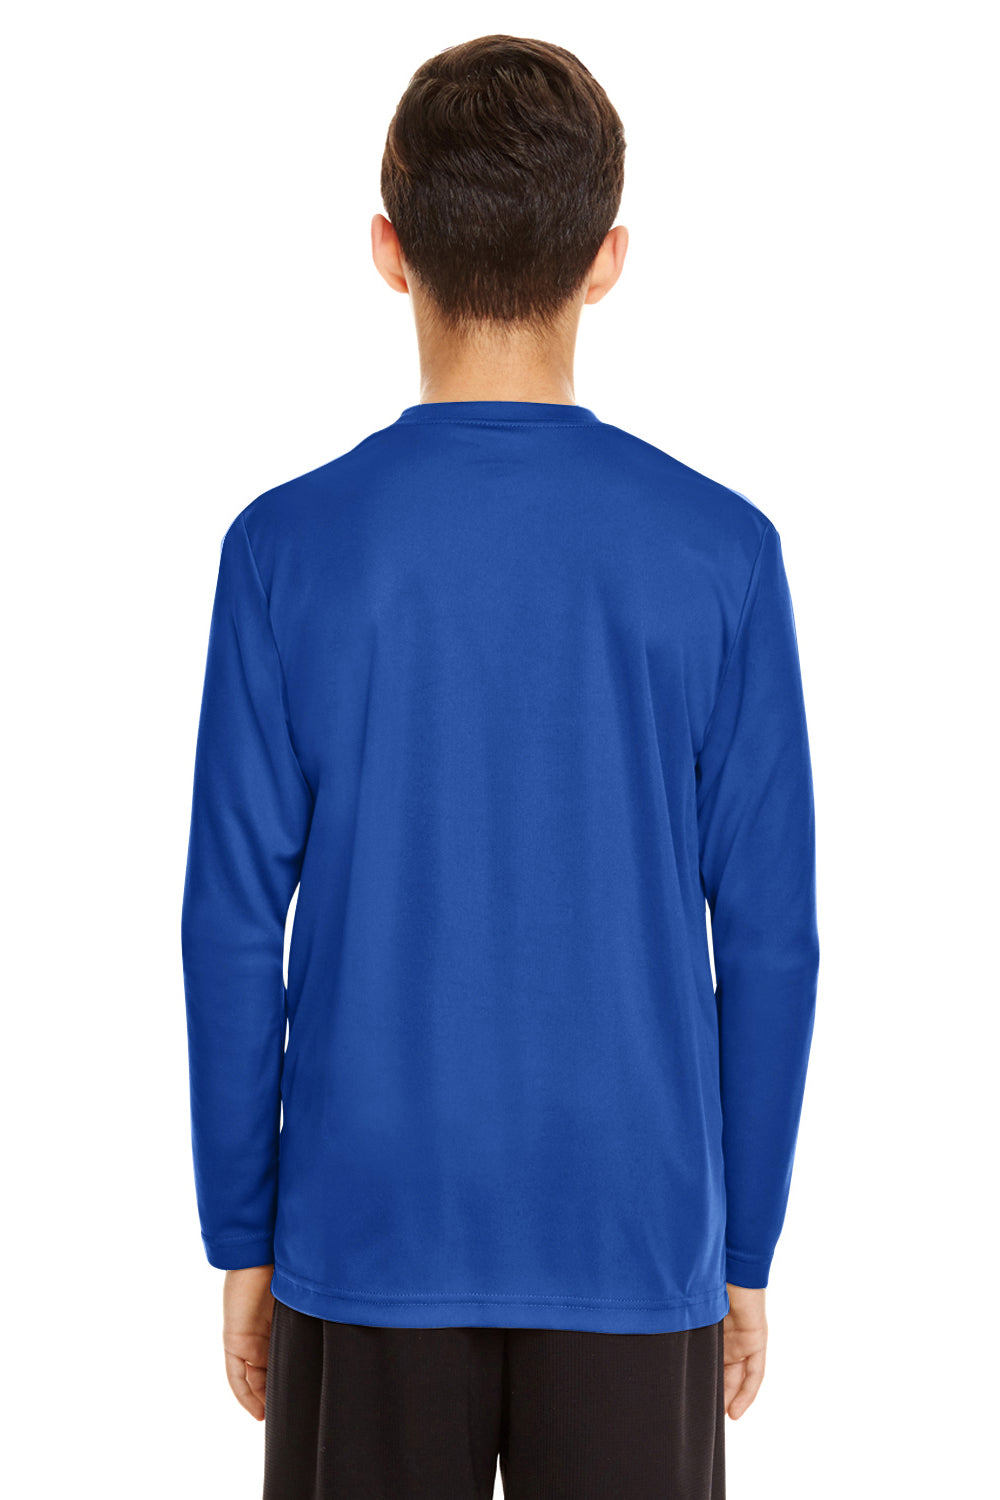 Team 365 TT11YL Youth Zone Performance Moisture Wicking Long Sleeve Crewneck T-Shirt Royal Blue Back